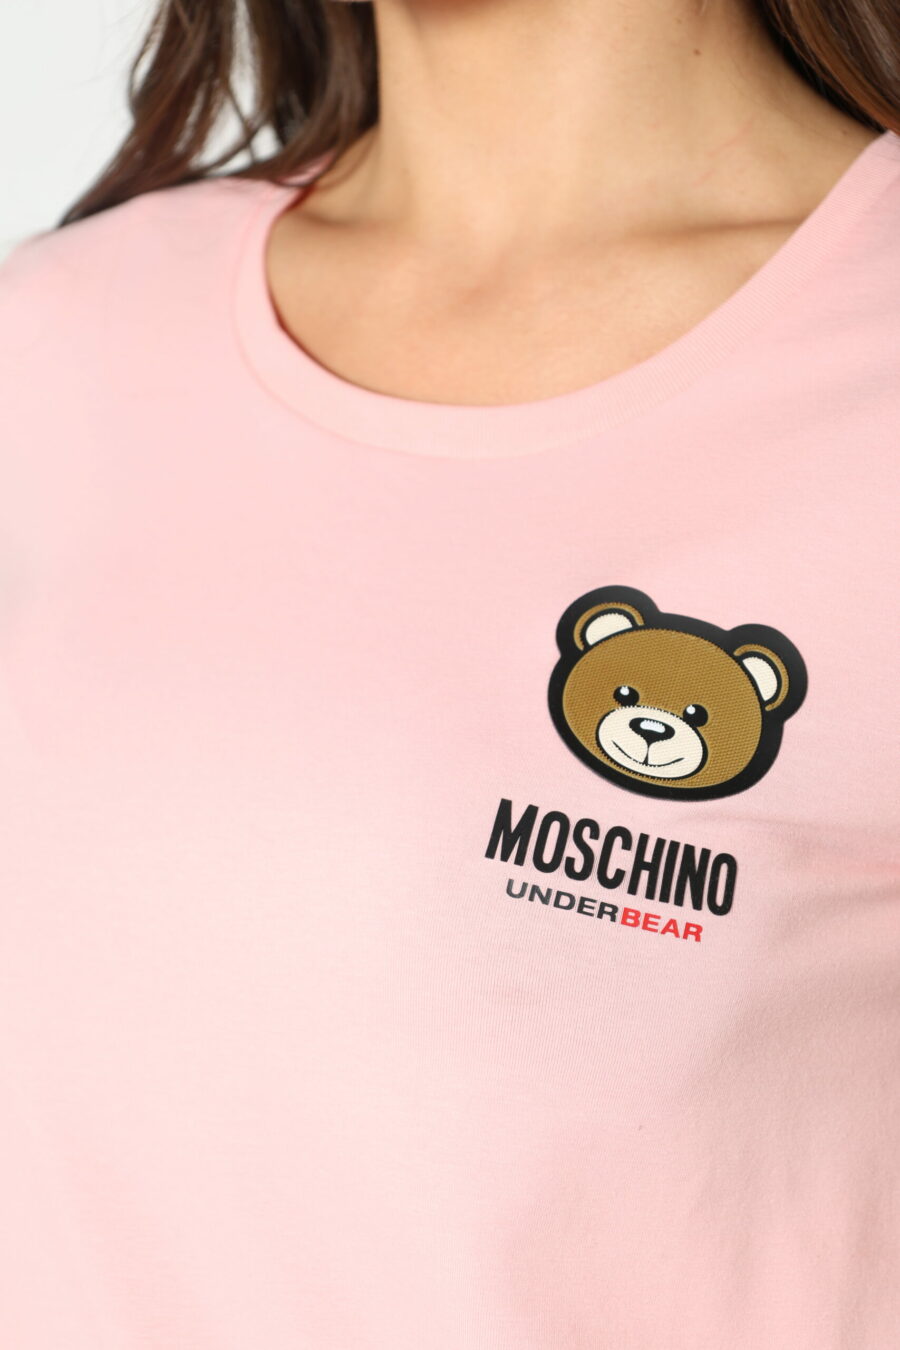 Rosa T-Shirt mit Bärenlogo-Aufnäher "underbear" - 8052865435499 322 skaliert